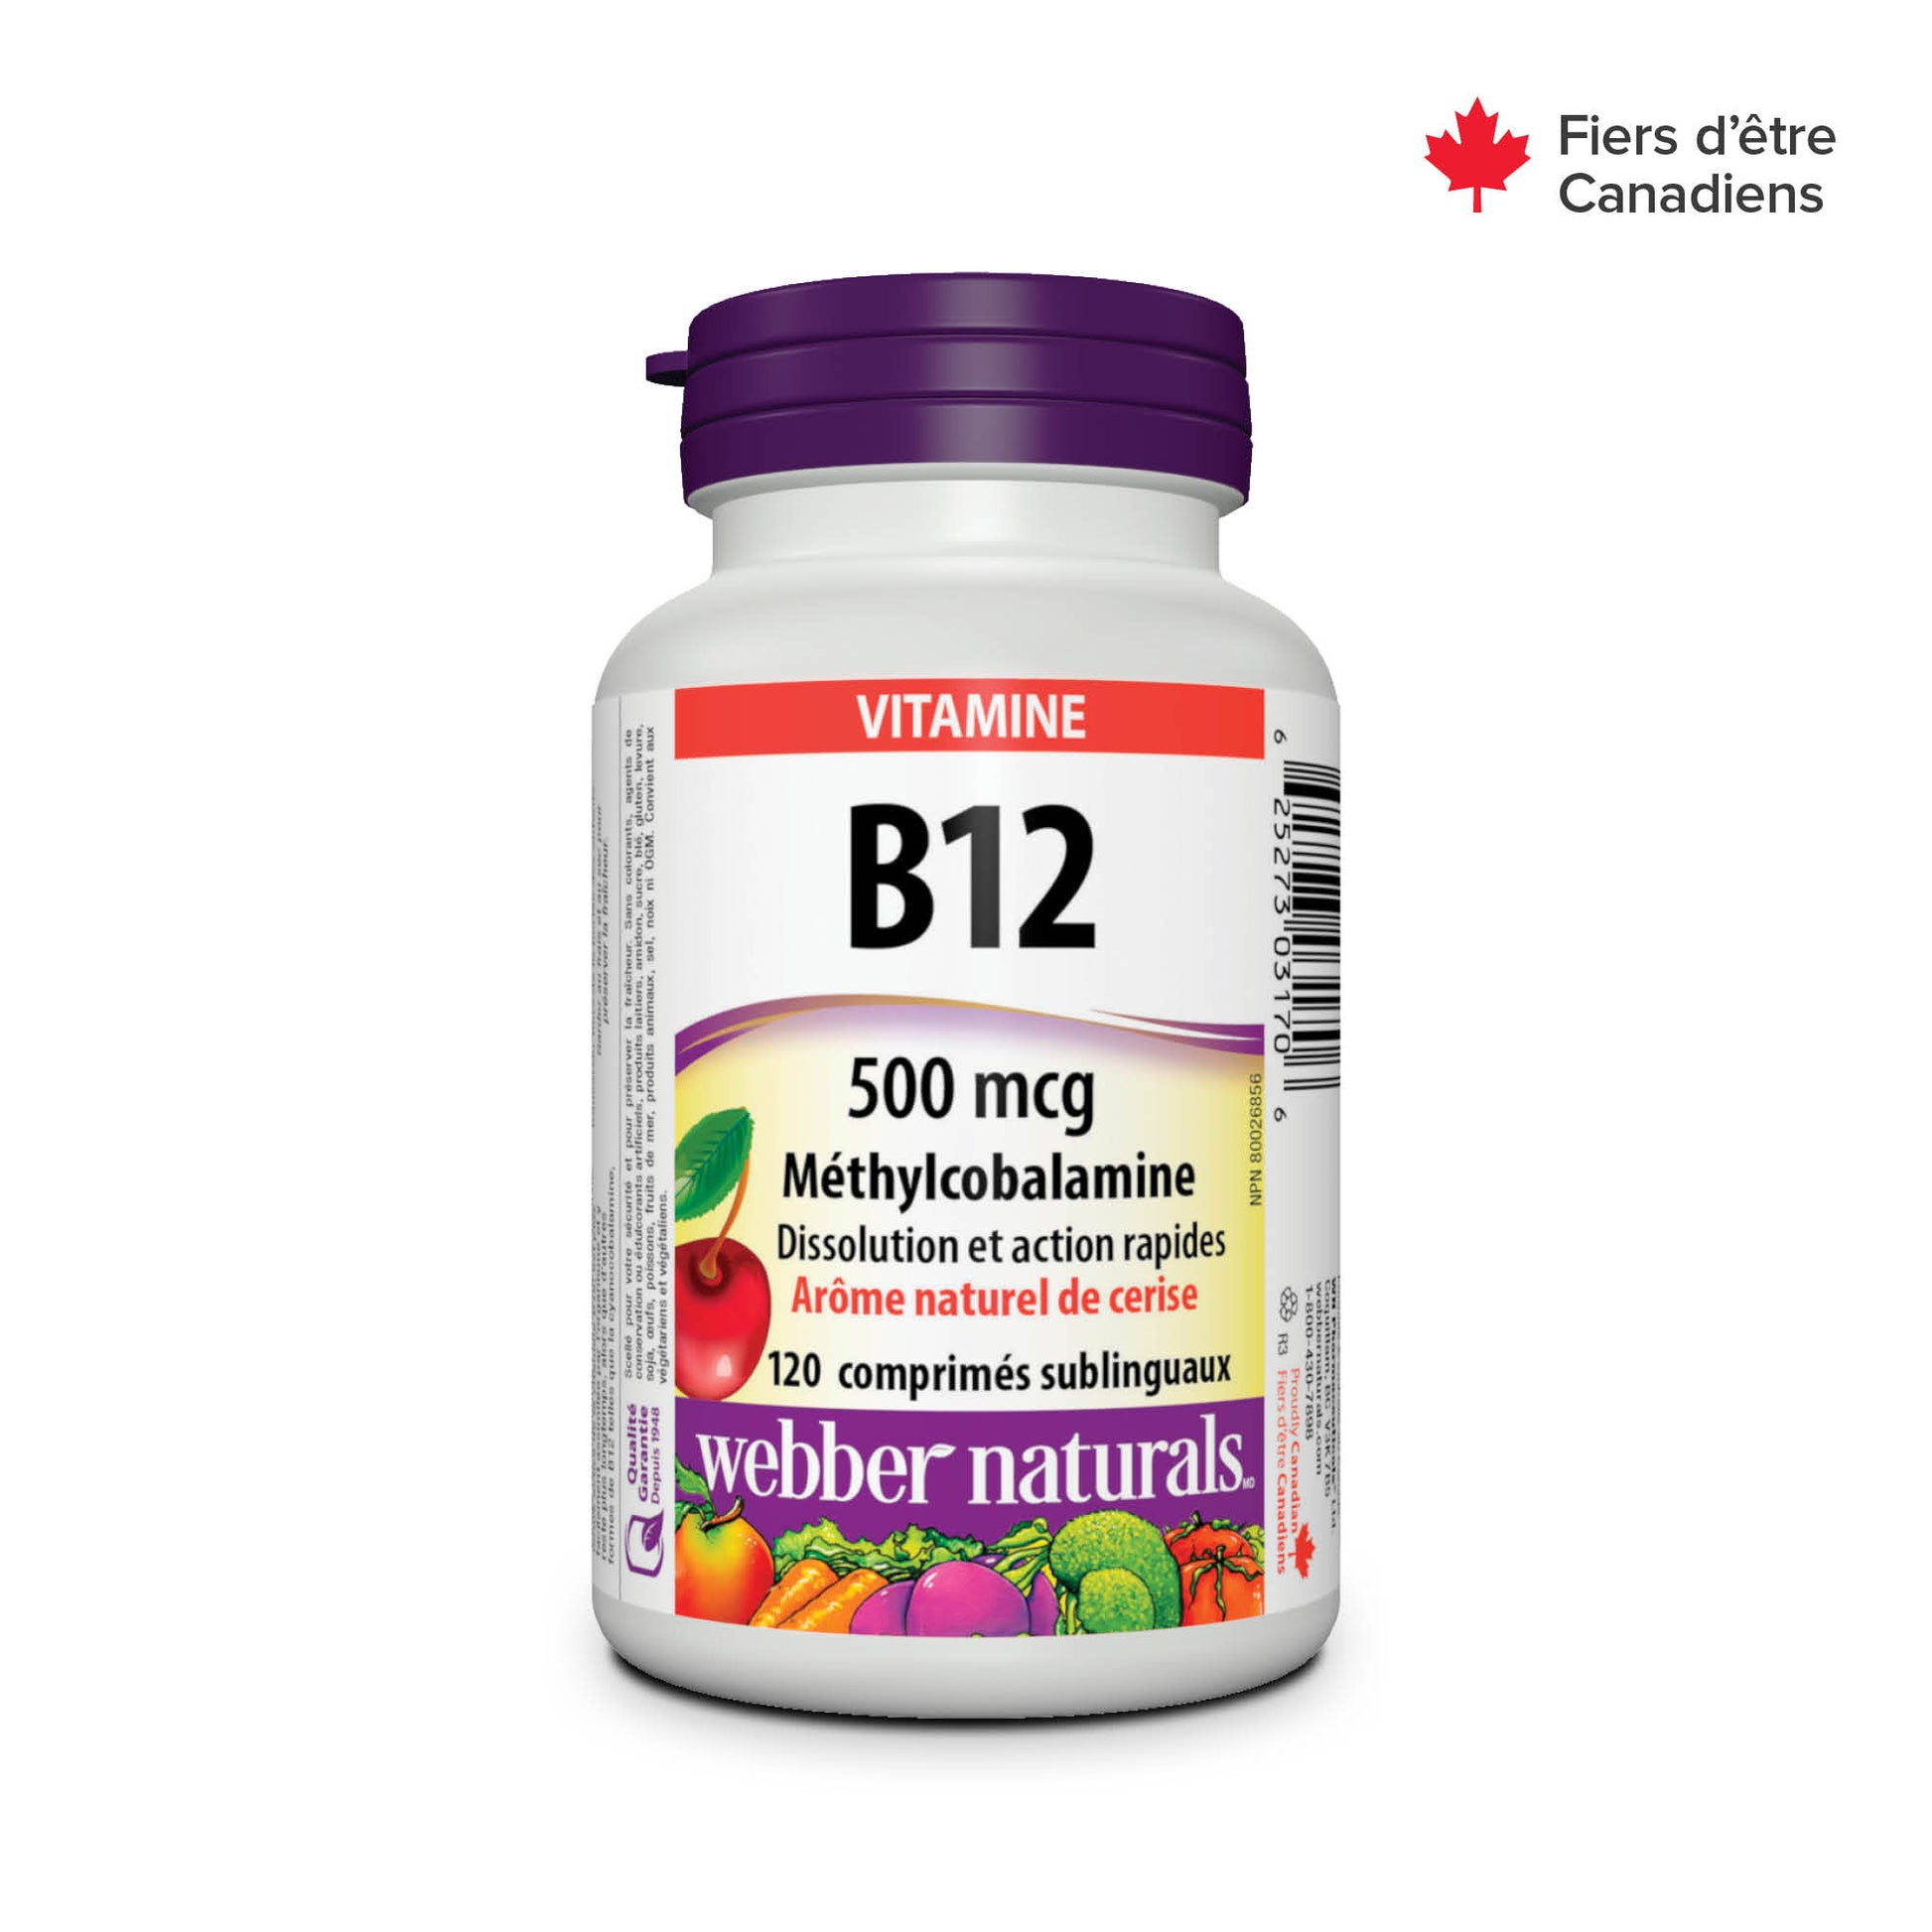 Vitamine B12 500 mcg Arôme naturel de cerise for Webber Naturals|v|hi-res|WN3170